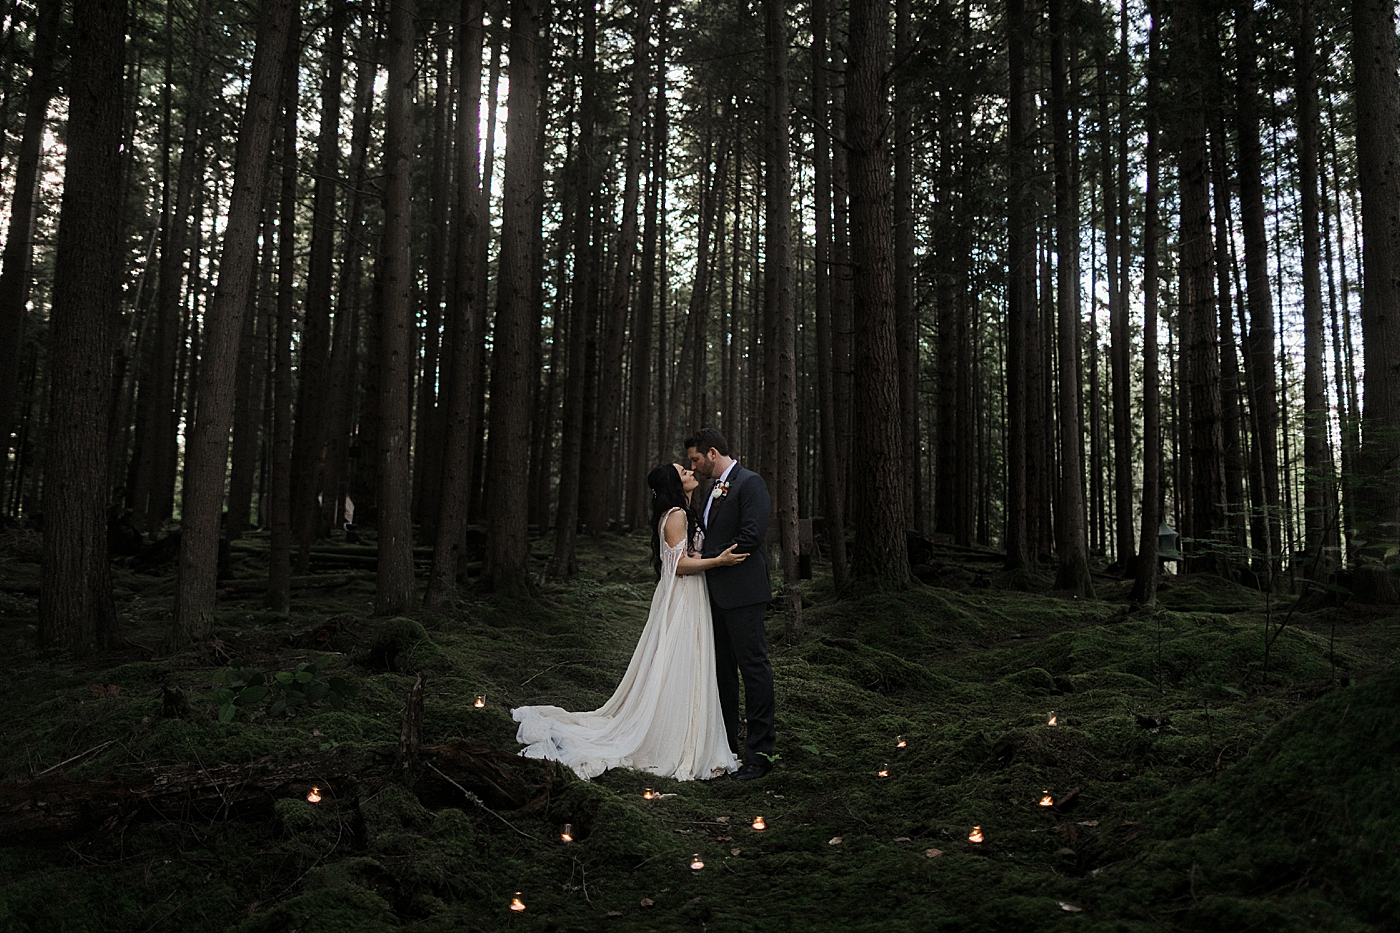 Intimate Emerald Forest Elopement | Megan Montalvo Photography